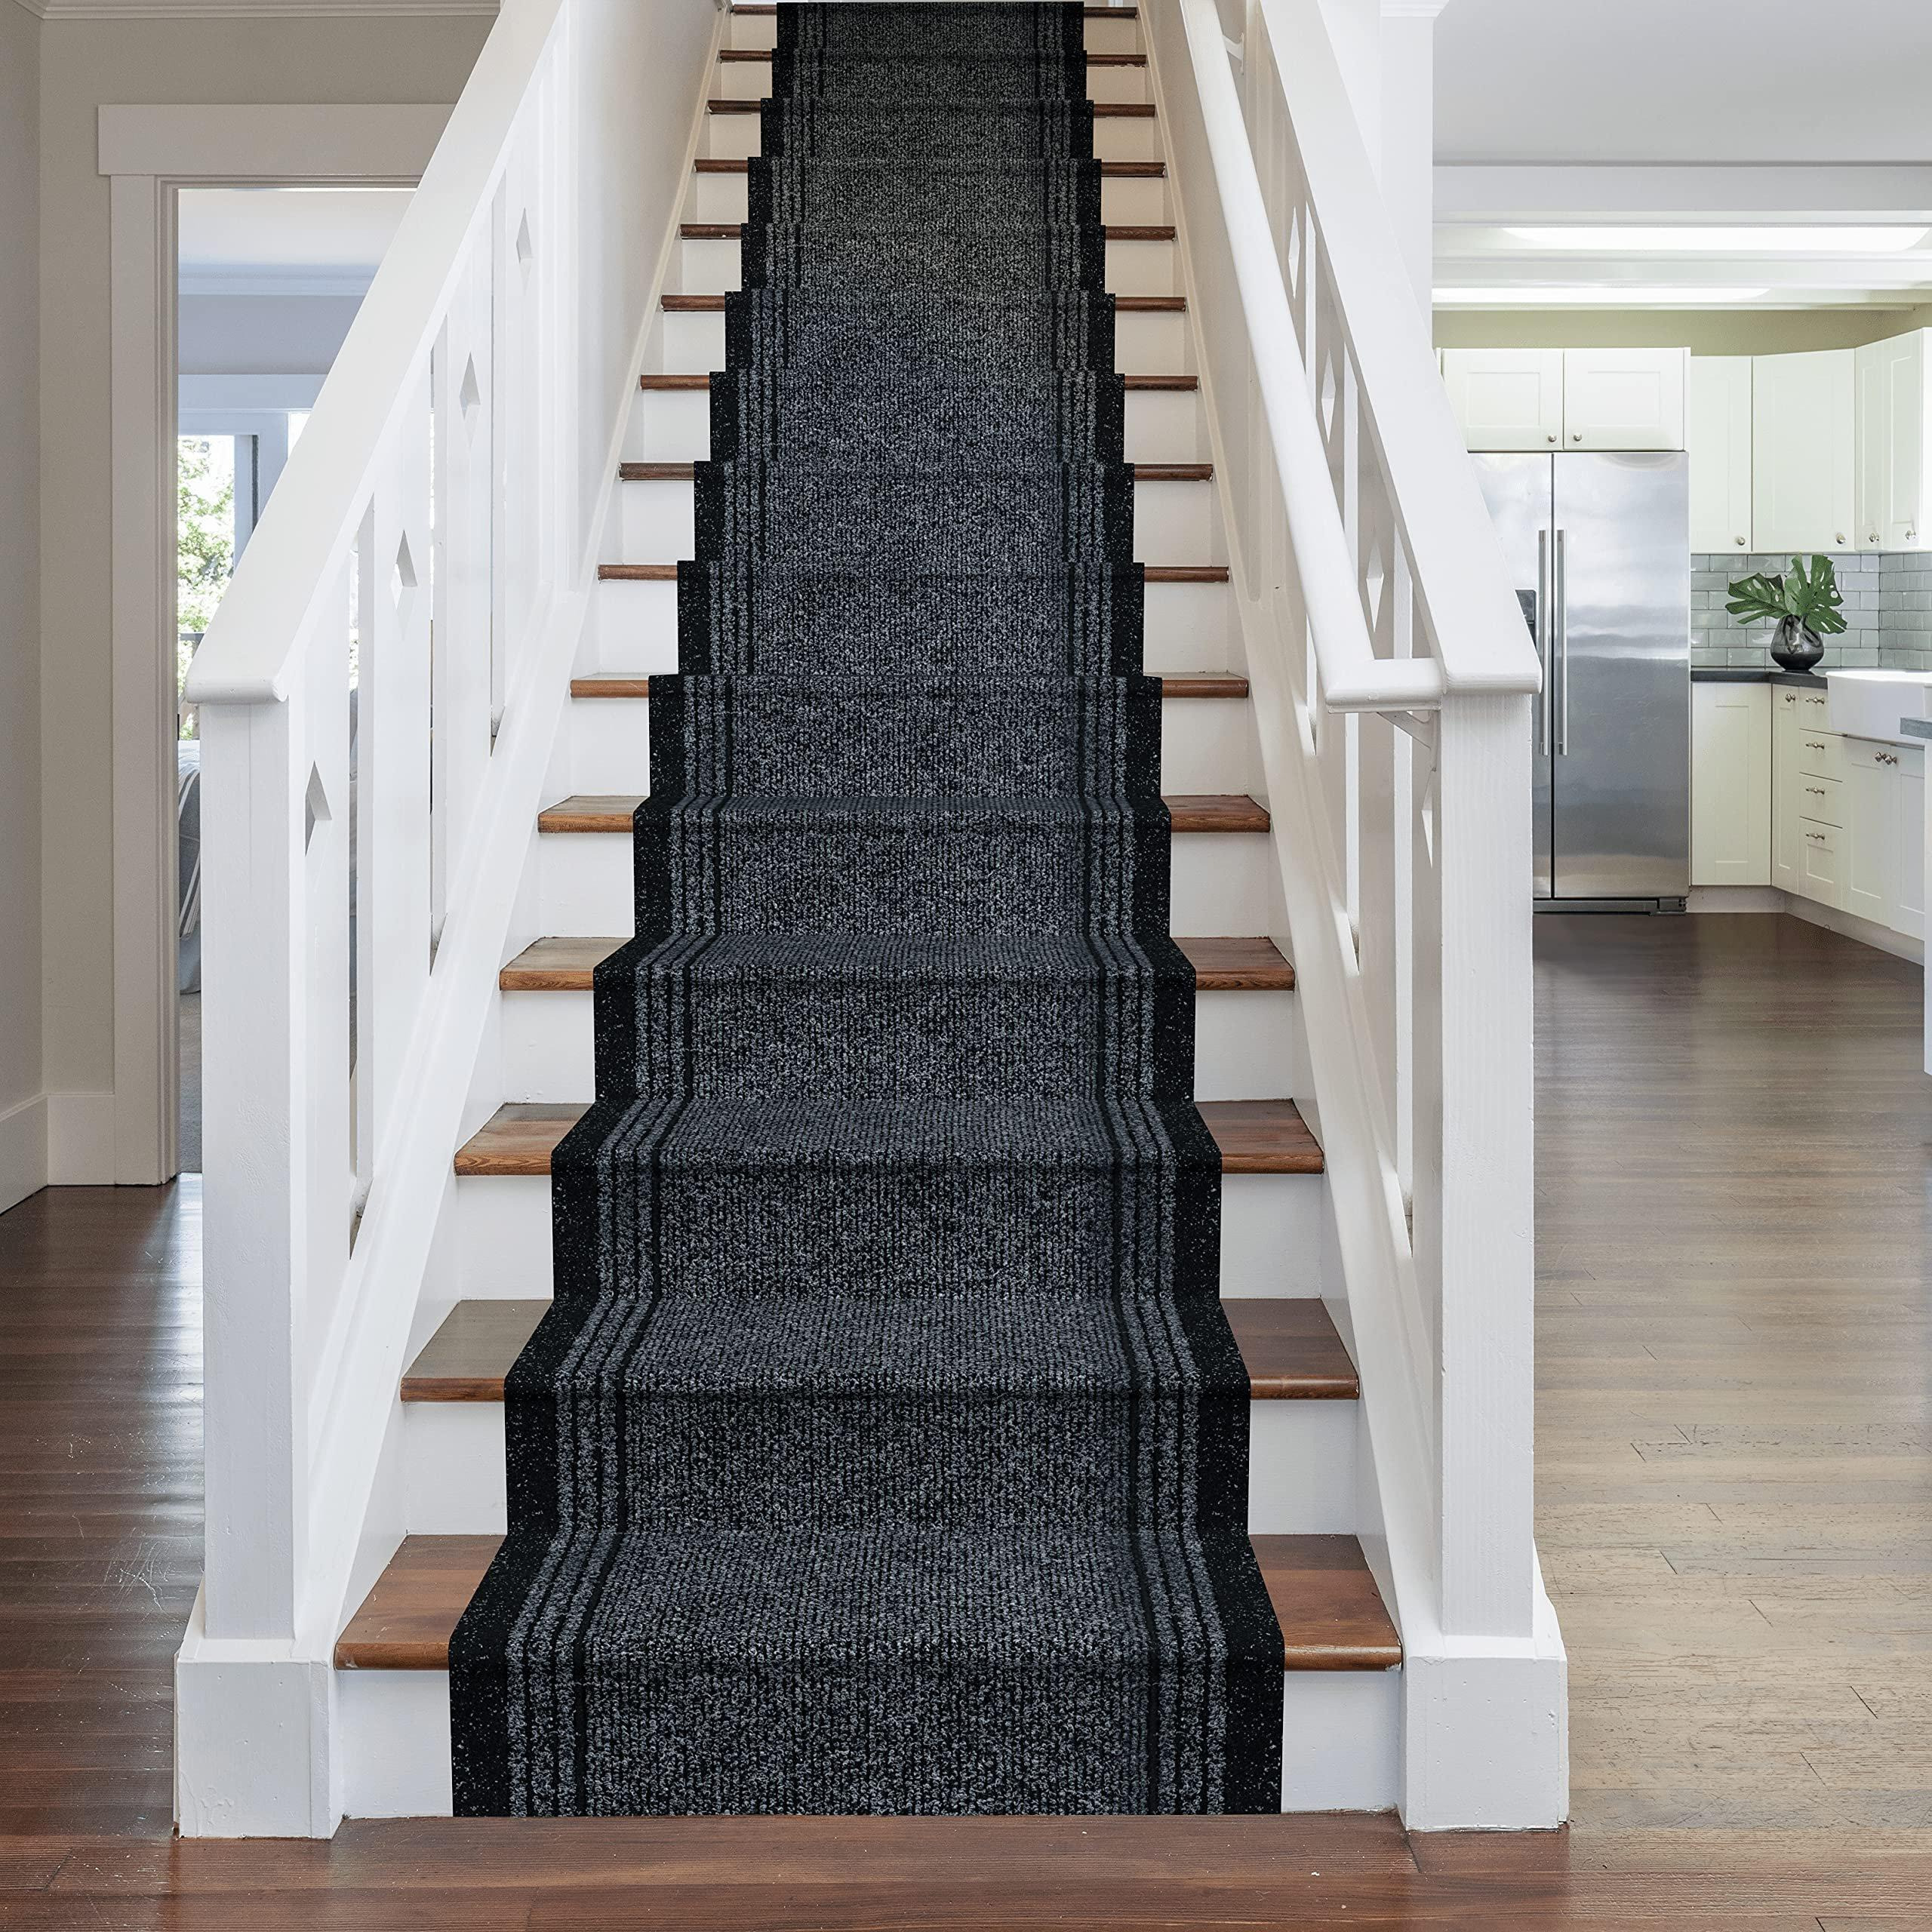 Black Inca Stair Carpet Runner - image 1